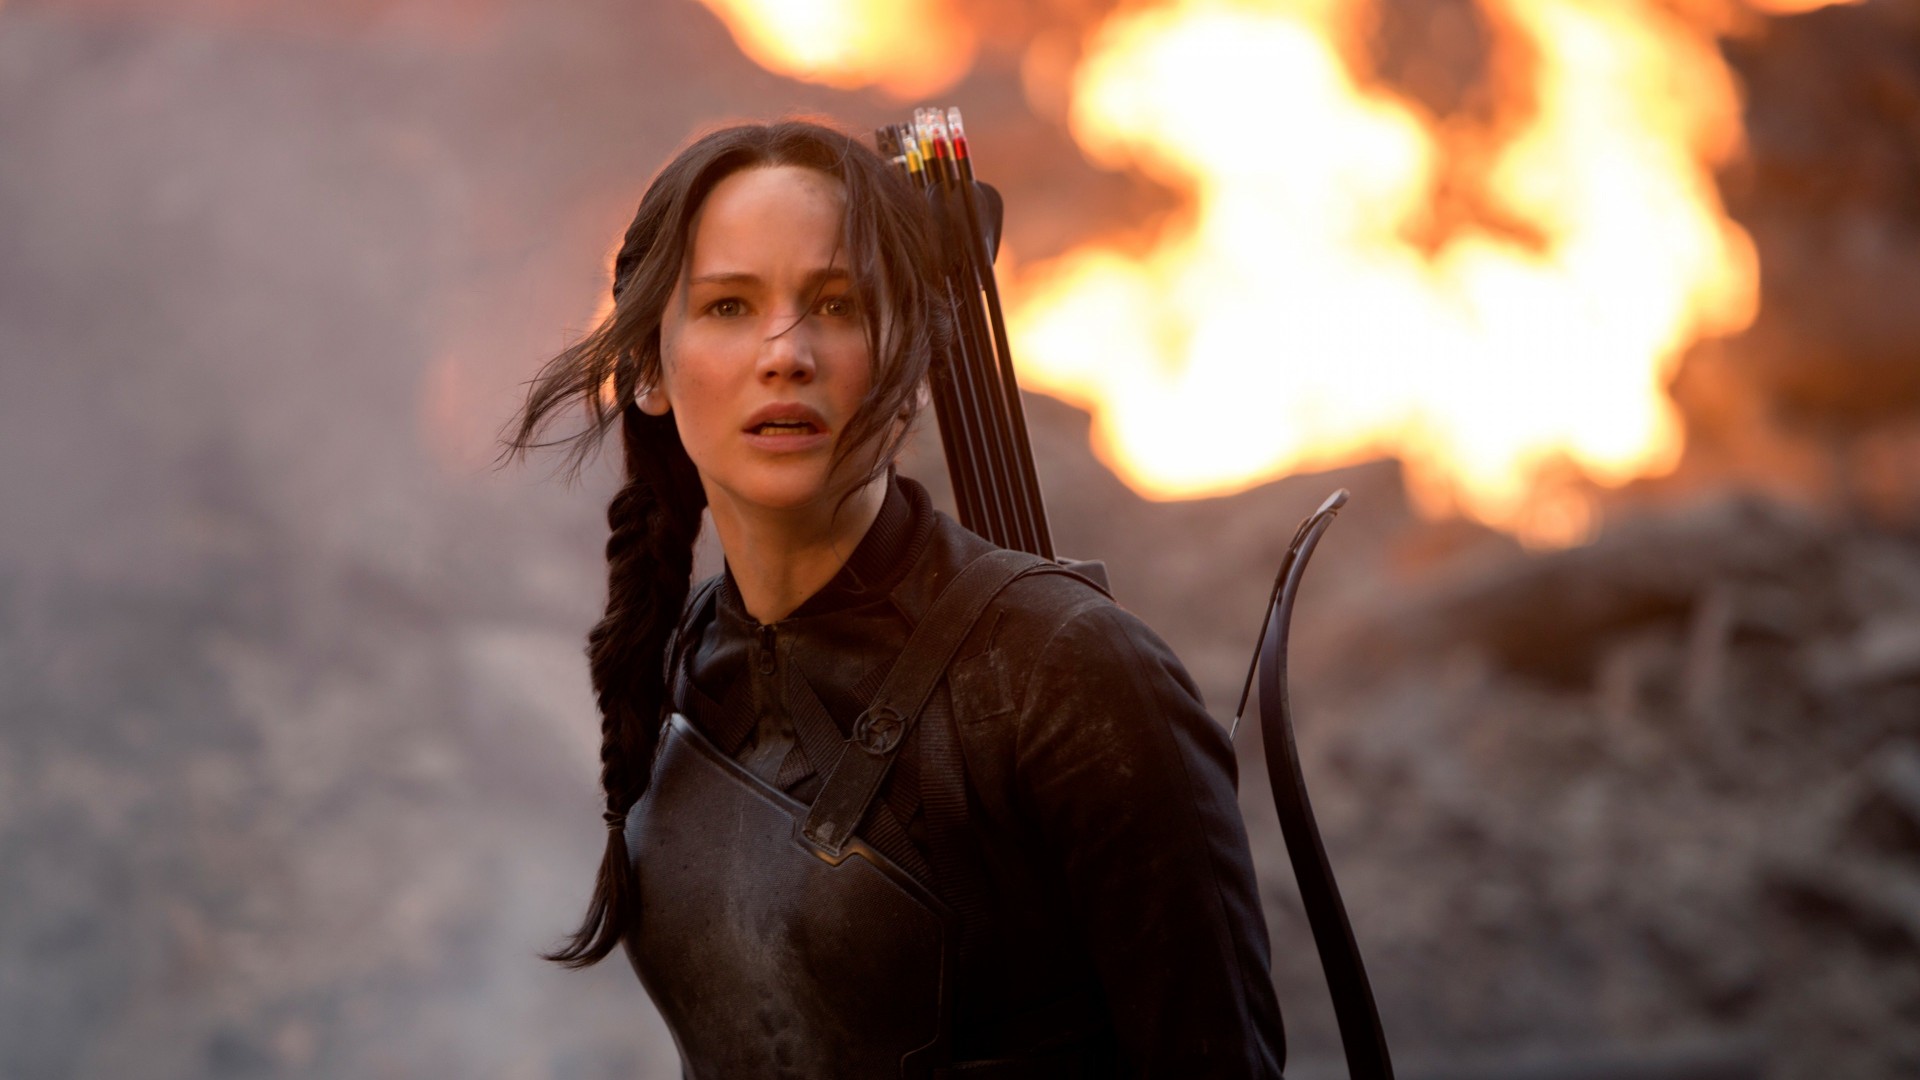 Jennifer Lawrence in The Hunger Games Wallpaper for Desktop 1920x1080